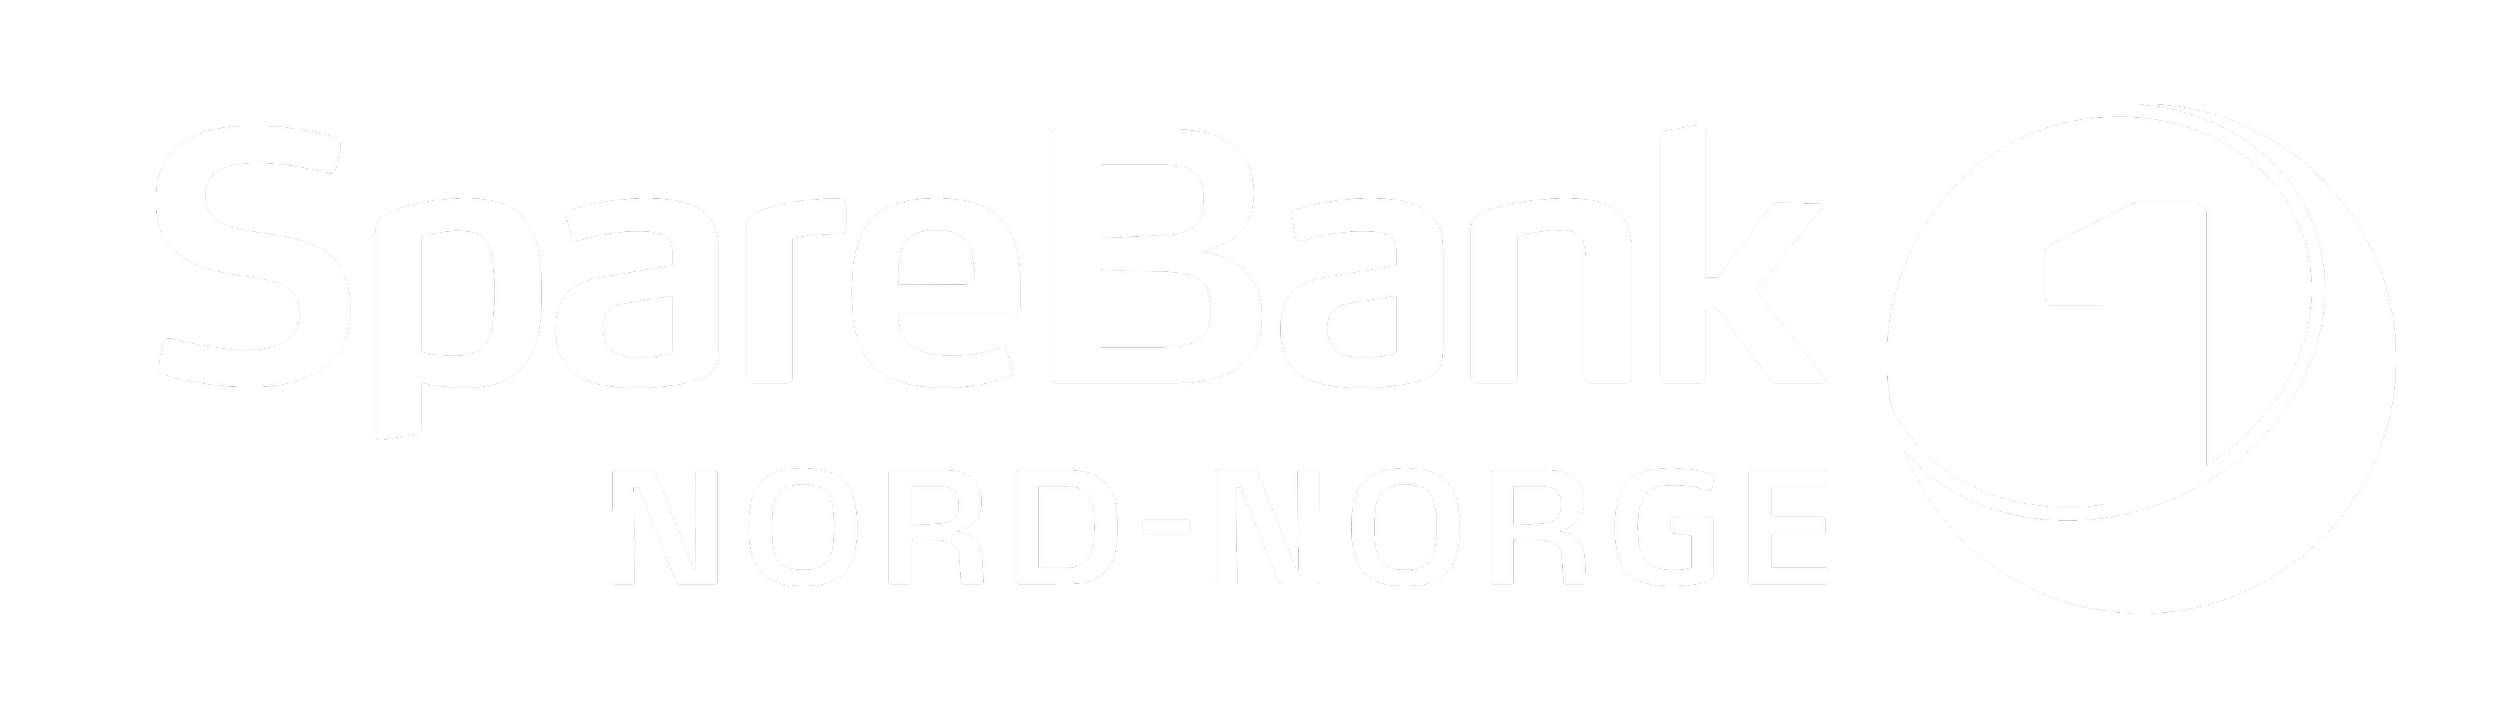 Customer logo SpareBank 1 Nord-Norge